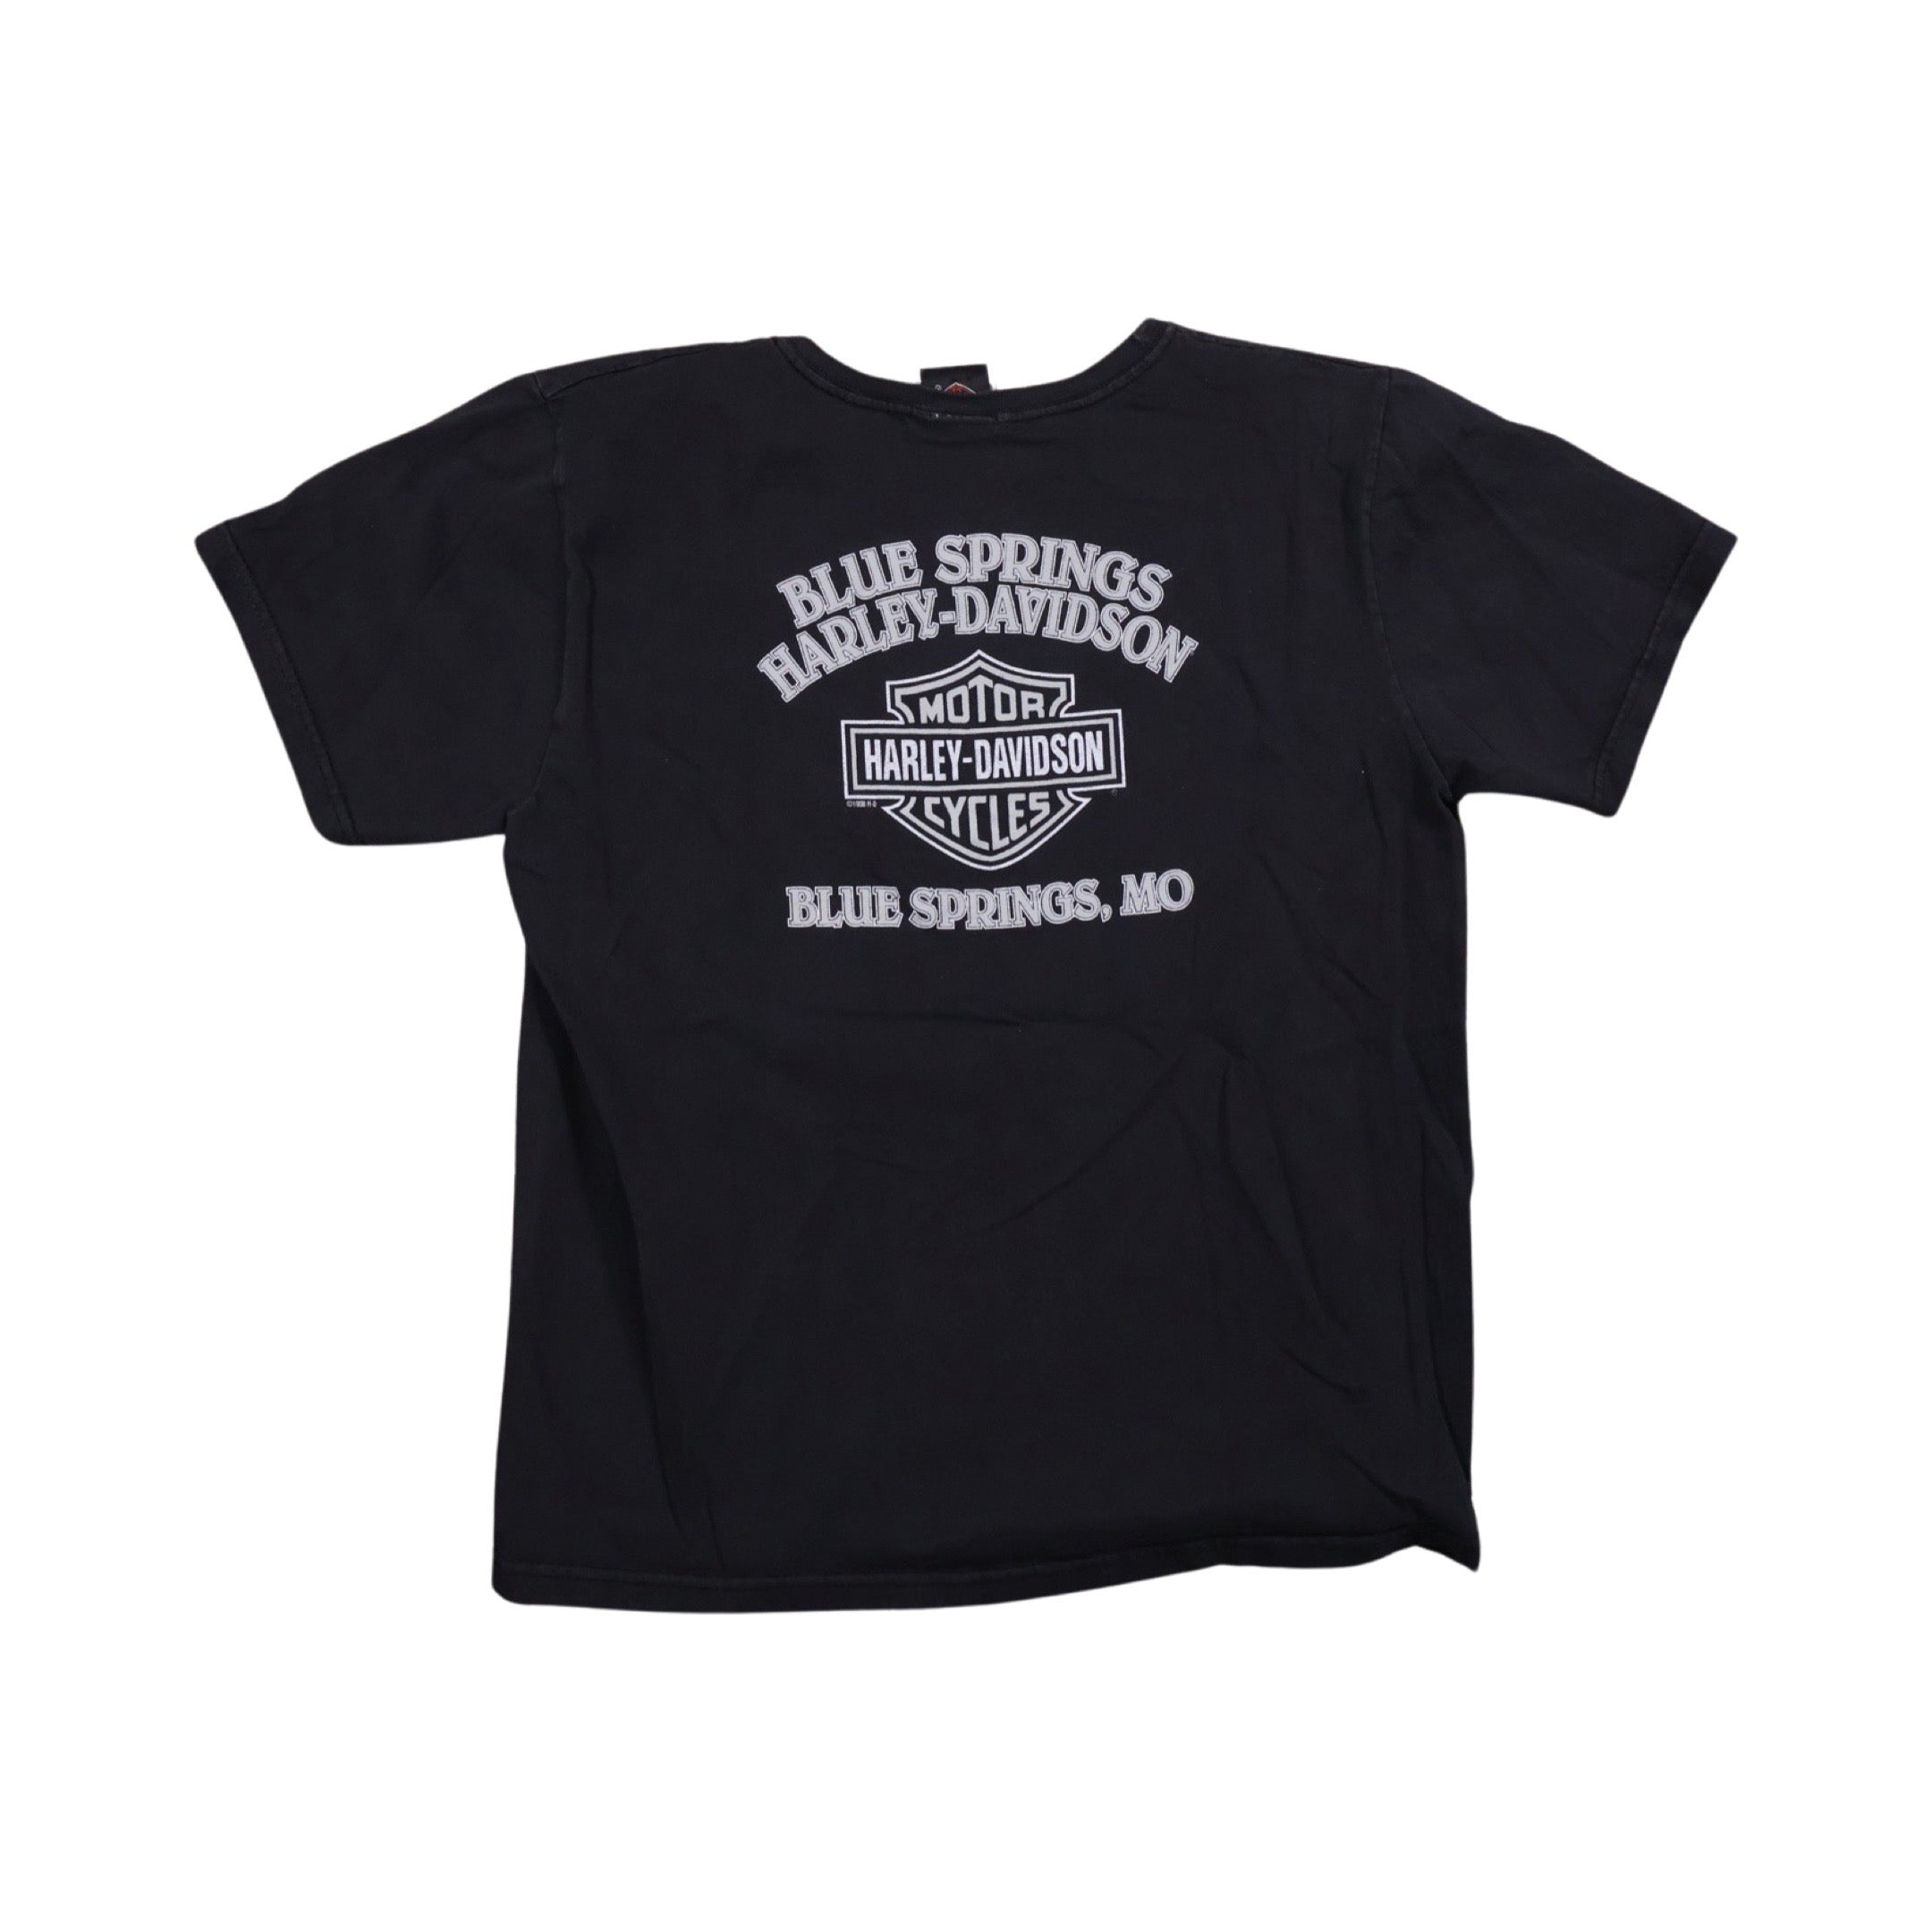 Harley Davidson 1999 Women’s T-Shirt (Medium)